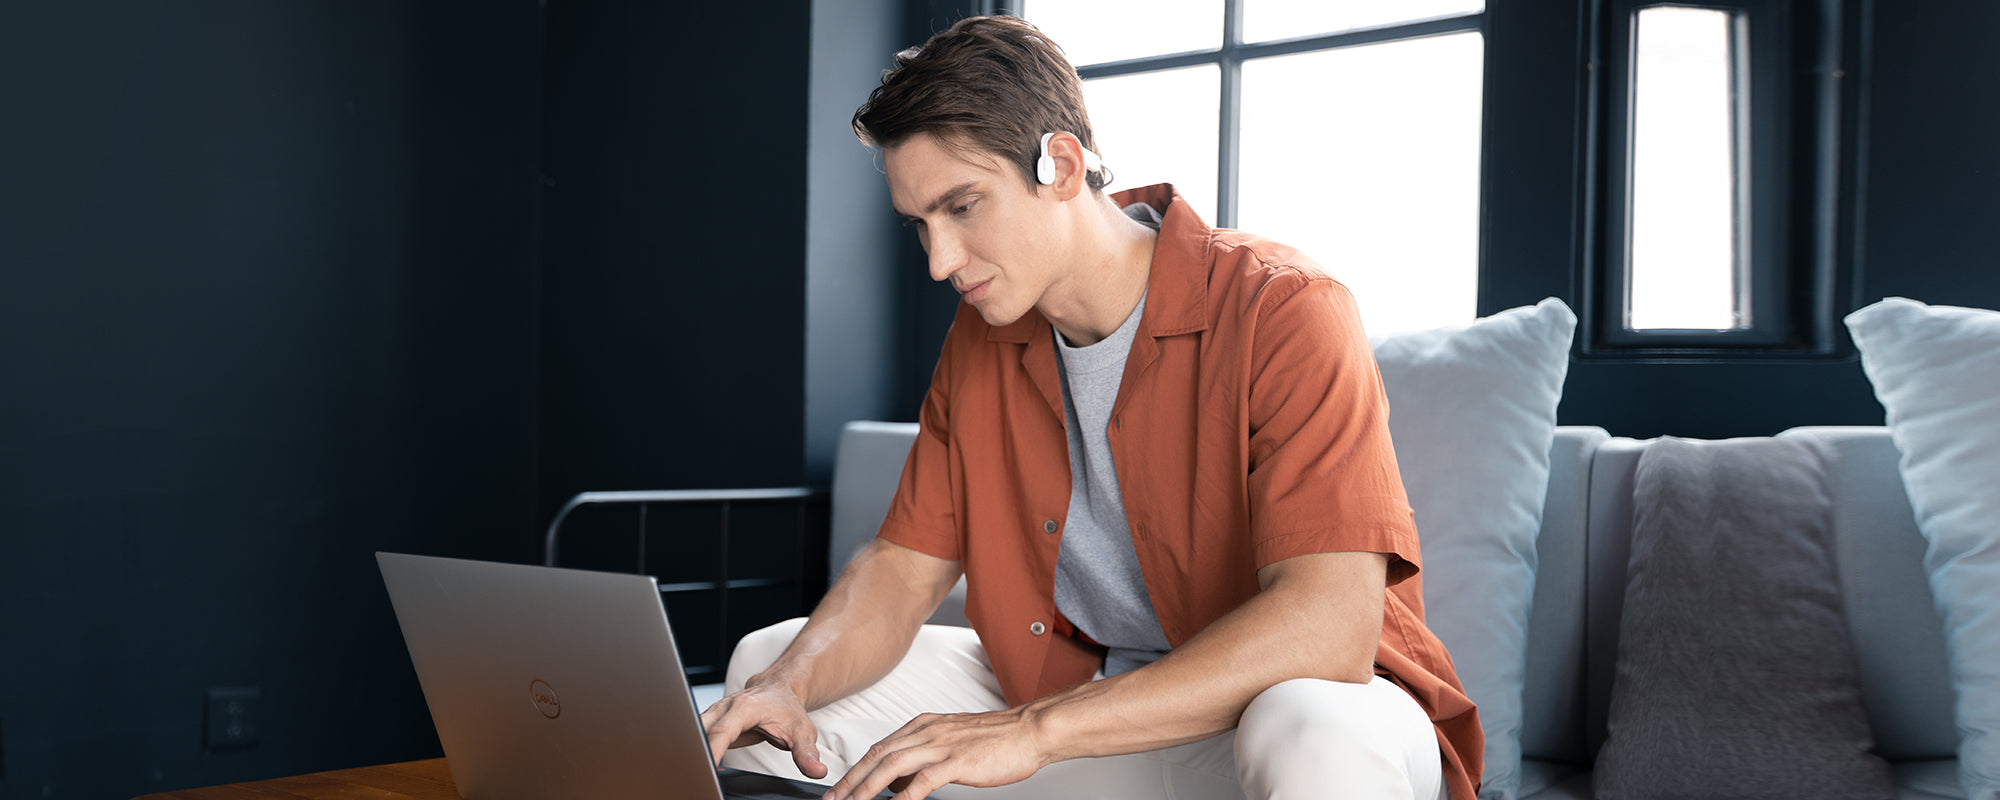 Man on laptop while wearing AfterShokz OpenMove headphones